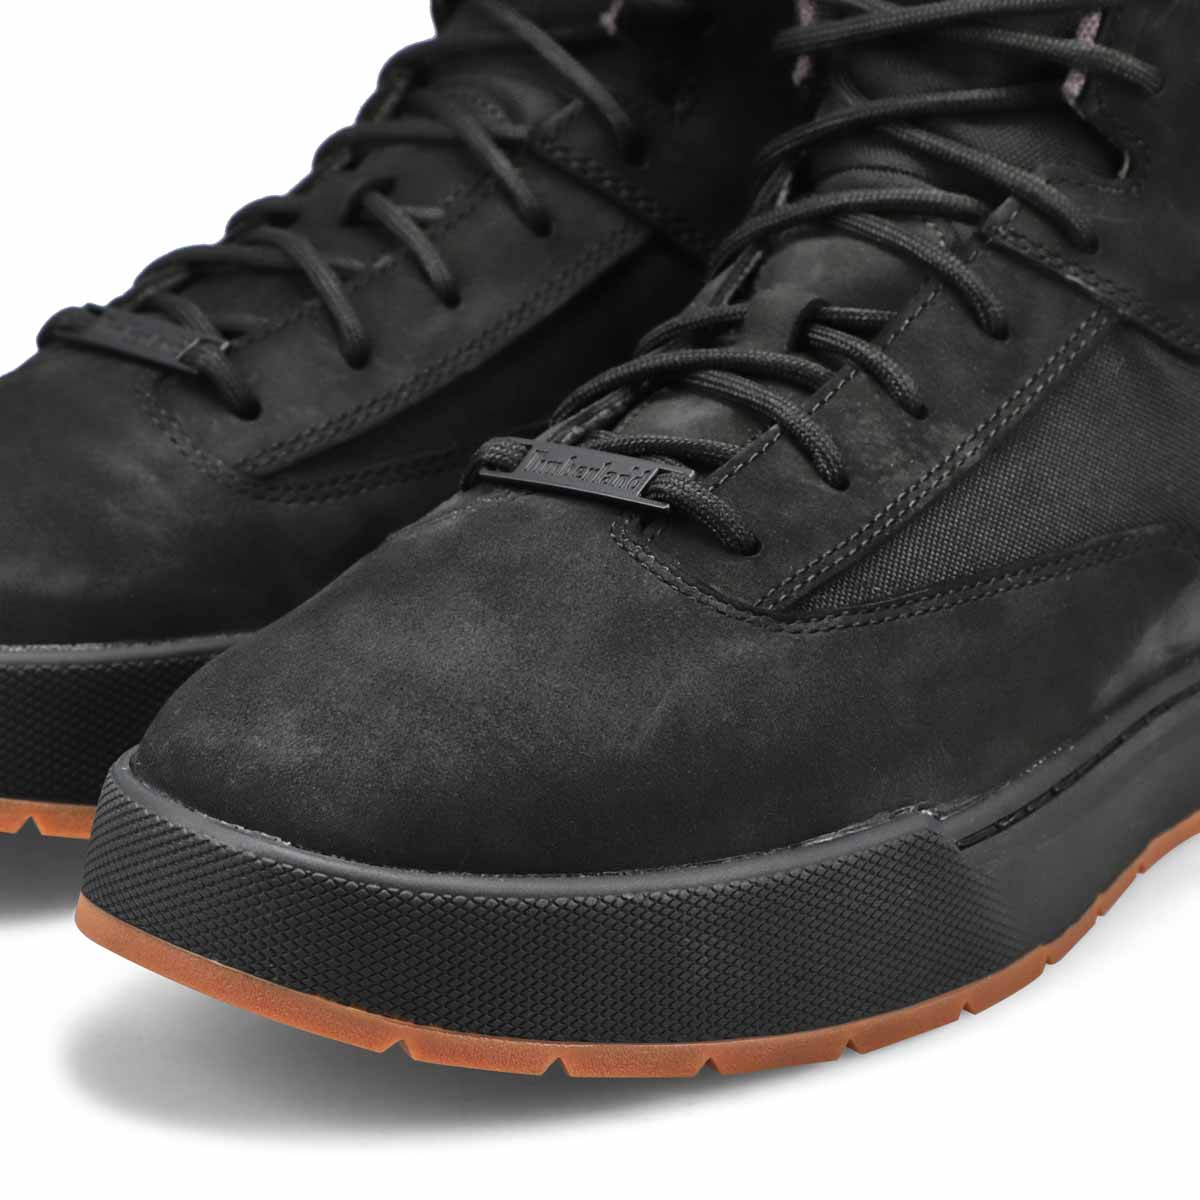 Men's Maple Grove Casual Boot - Black